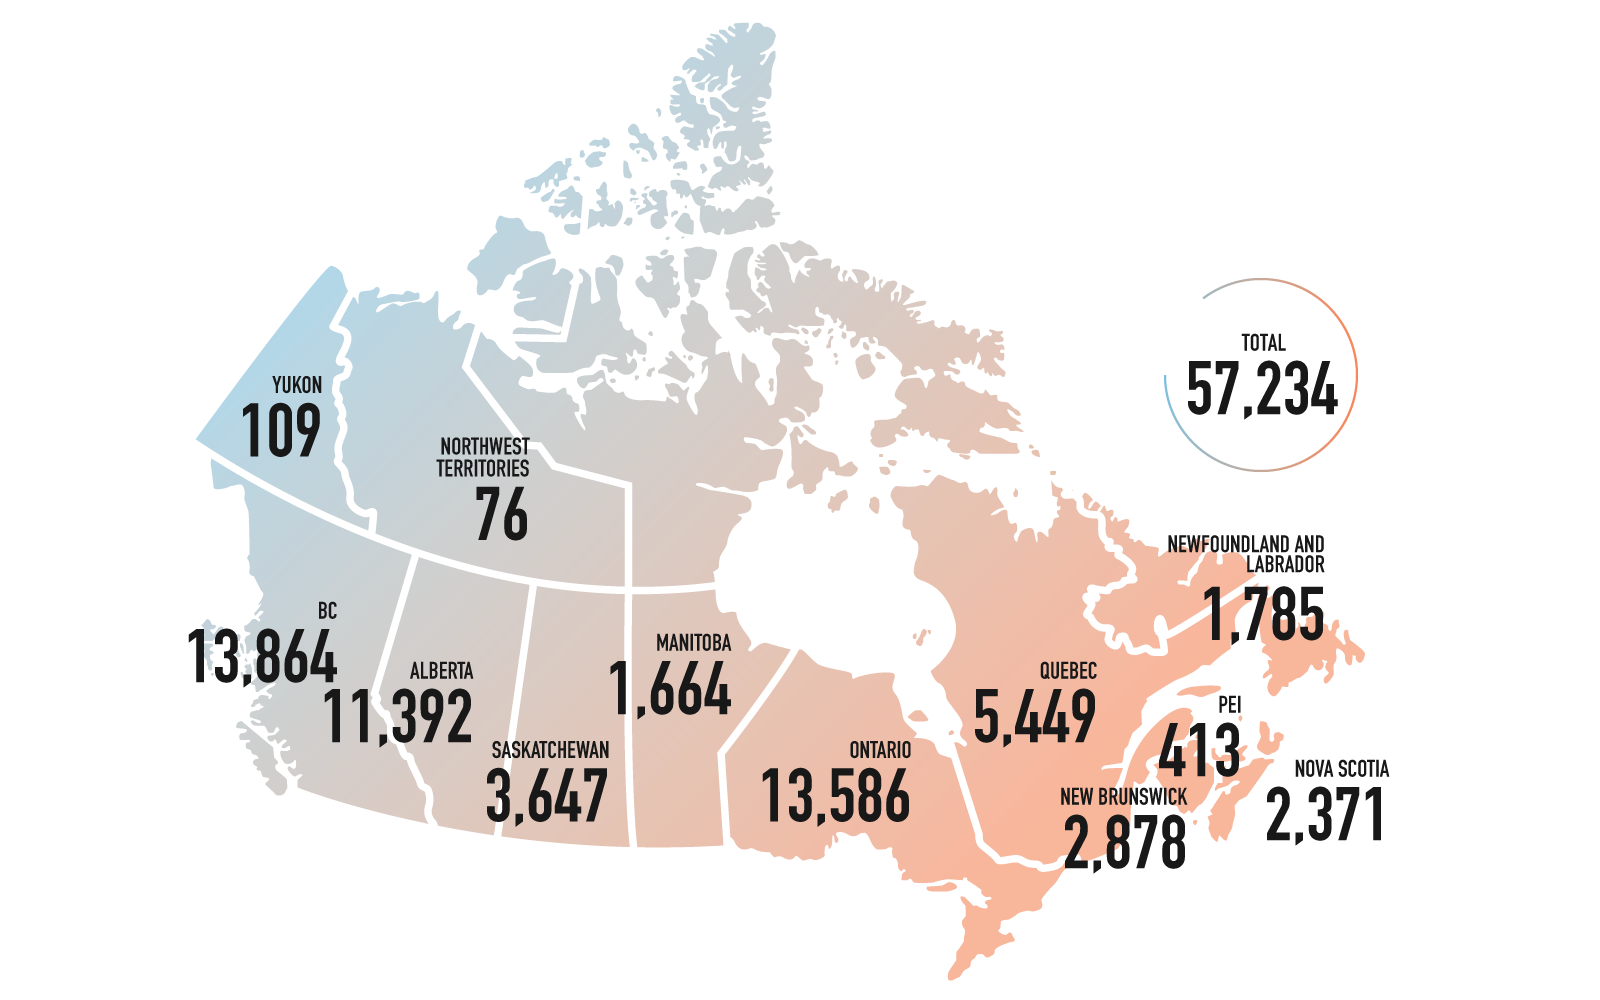 Map of number of Canada's eligible voters by province, as of December 2022. Alberta = 11,392, British Columbia = 13,864, Manitoba = 1,664, New Brunswick = 2,878, Newfoundland and Labrador = 1,785, Northwest Territories = 76, Nova Scotia = 2,371, Ontario = 13,586, Prince Edward Island = 413, Quebec = 5,449, Saskatchewan = 3,647, Yukon Territory = 109